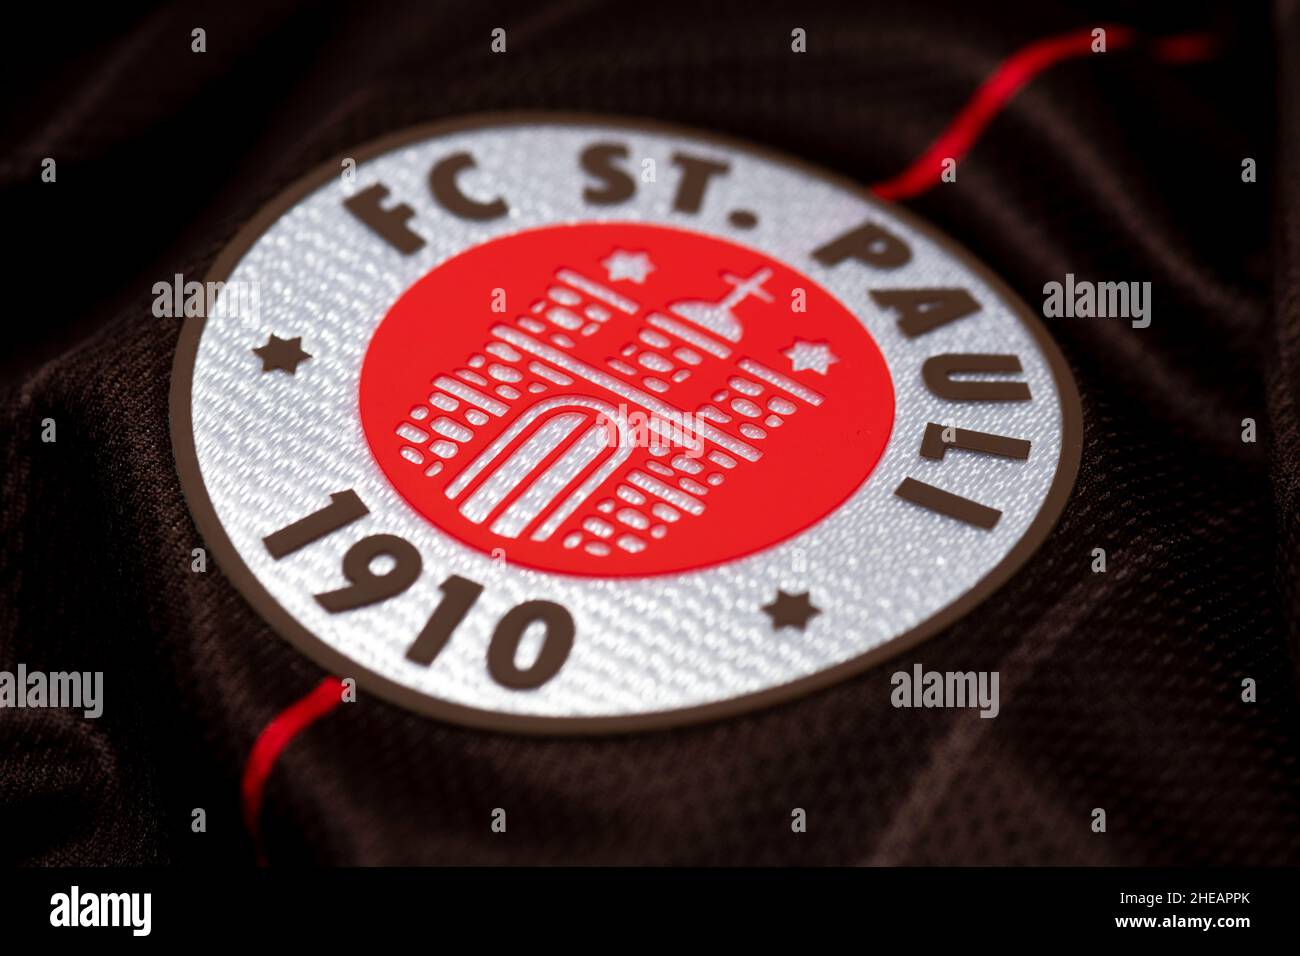 FC St. Pauli Stock Photo